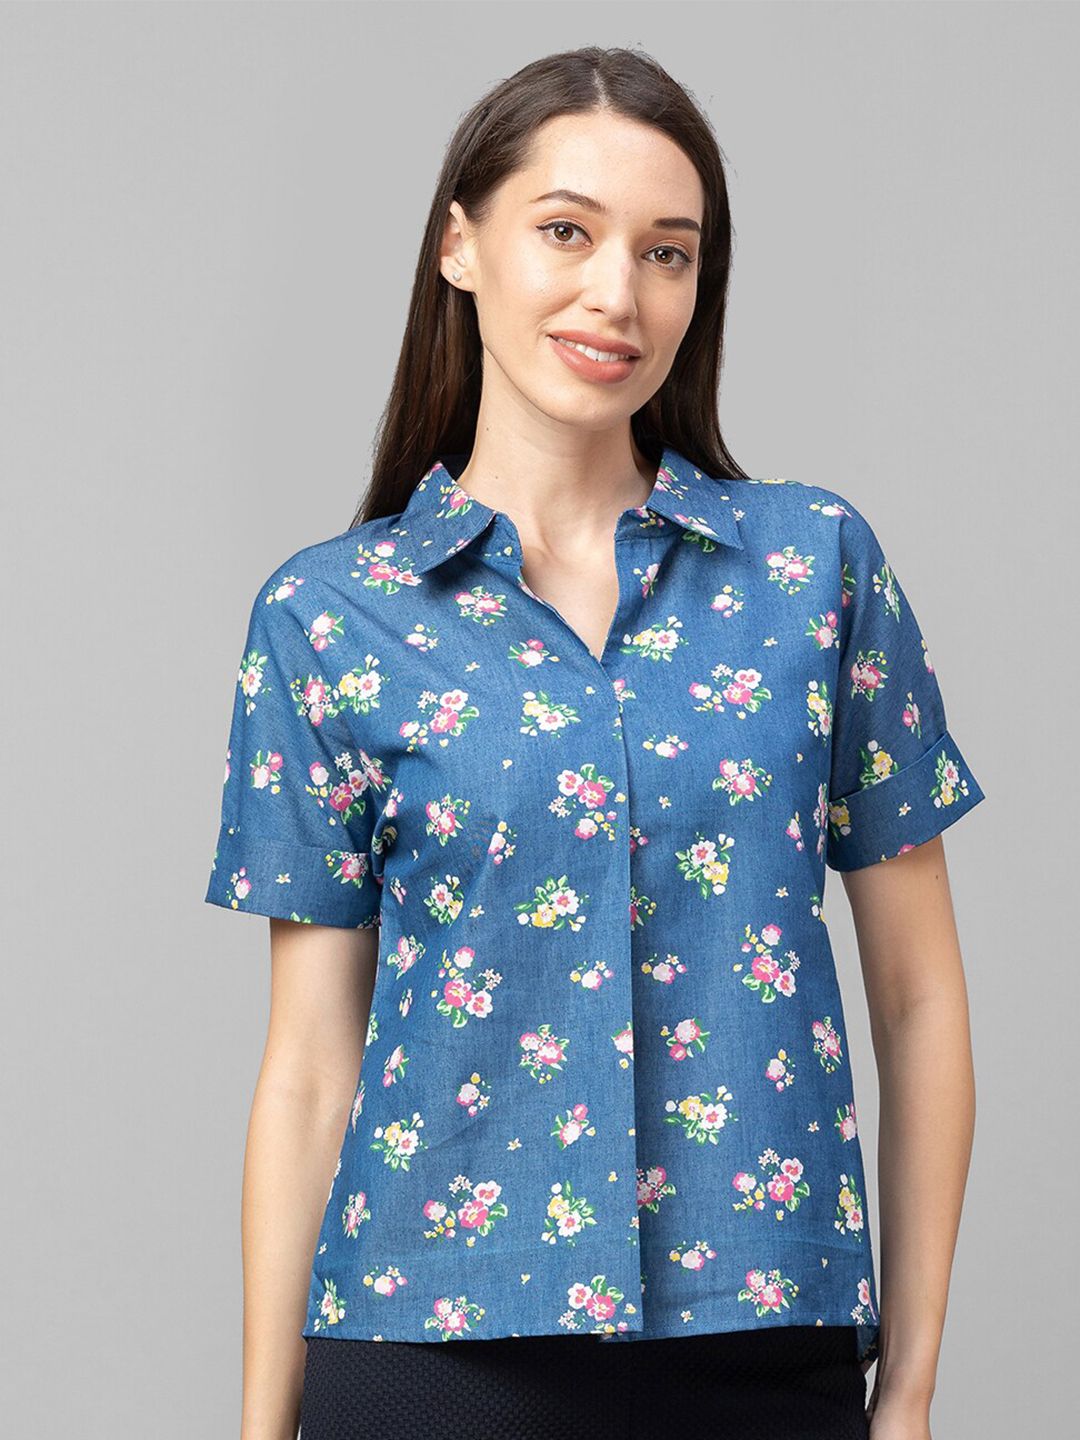 Globus Blue Floral Print Denim Shirt Style Top Price in India